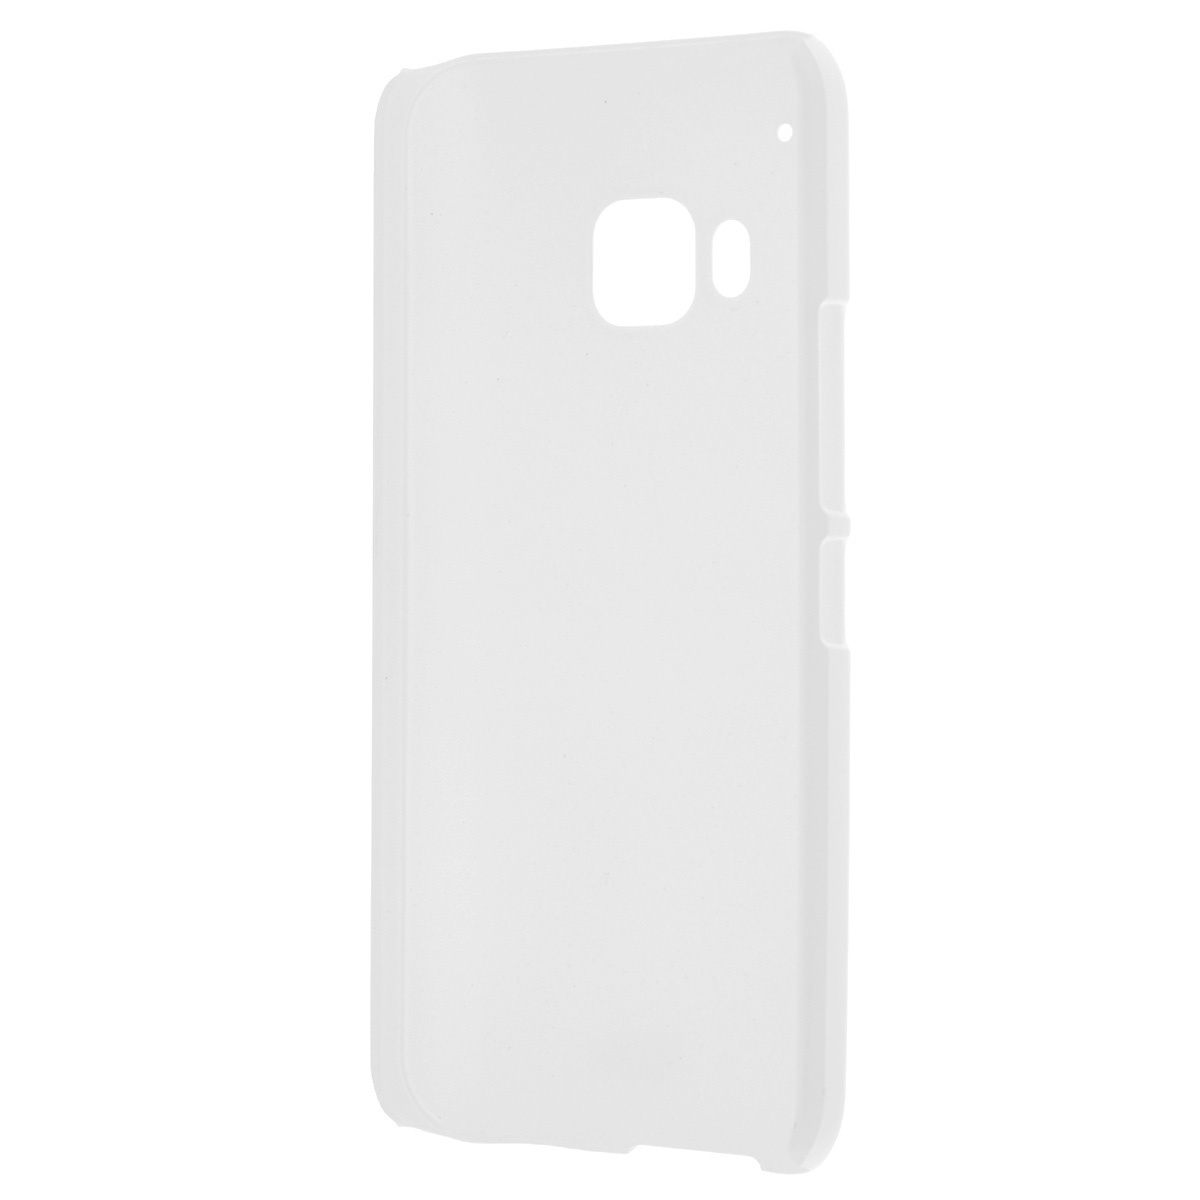 Skinbox Shield 4People   HTC One M9, White